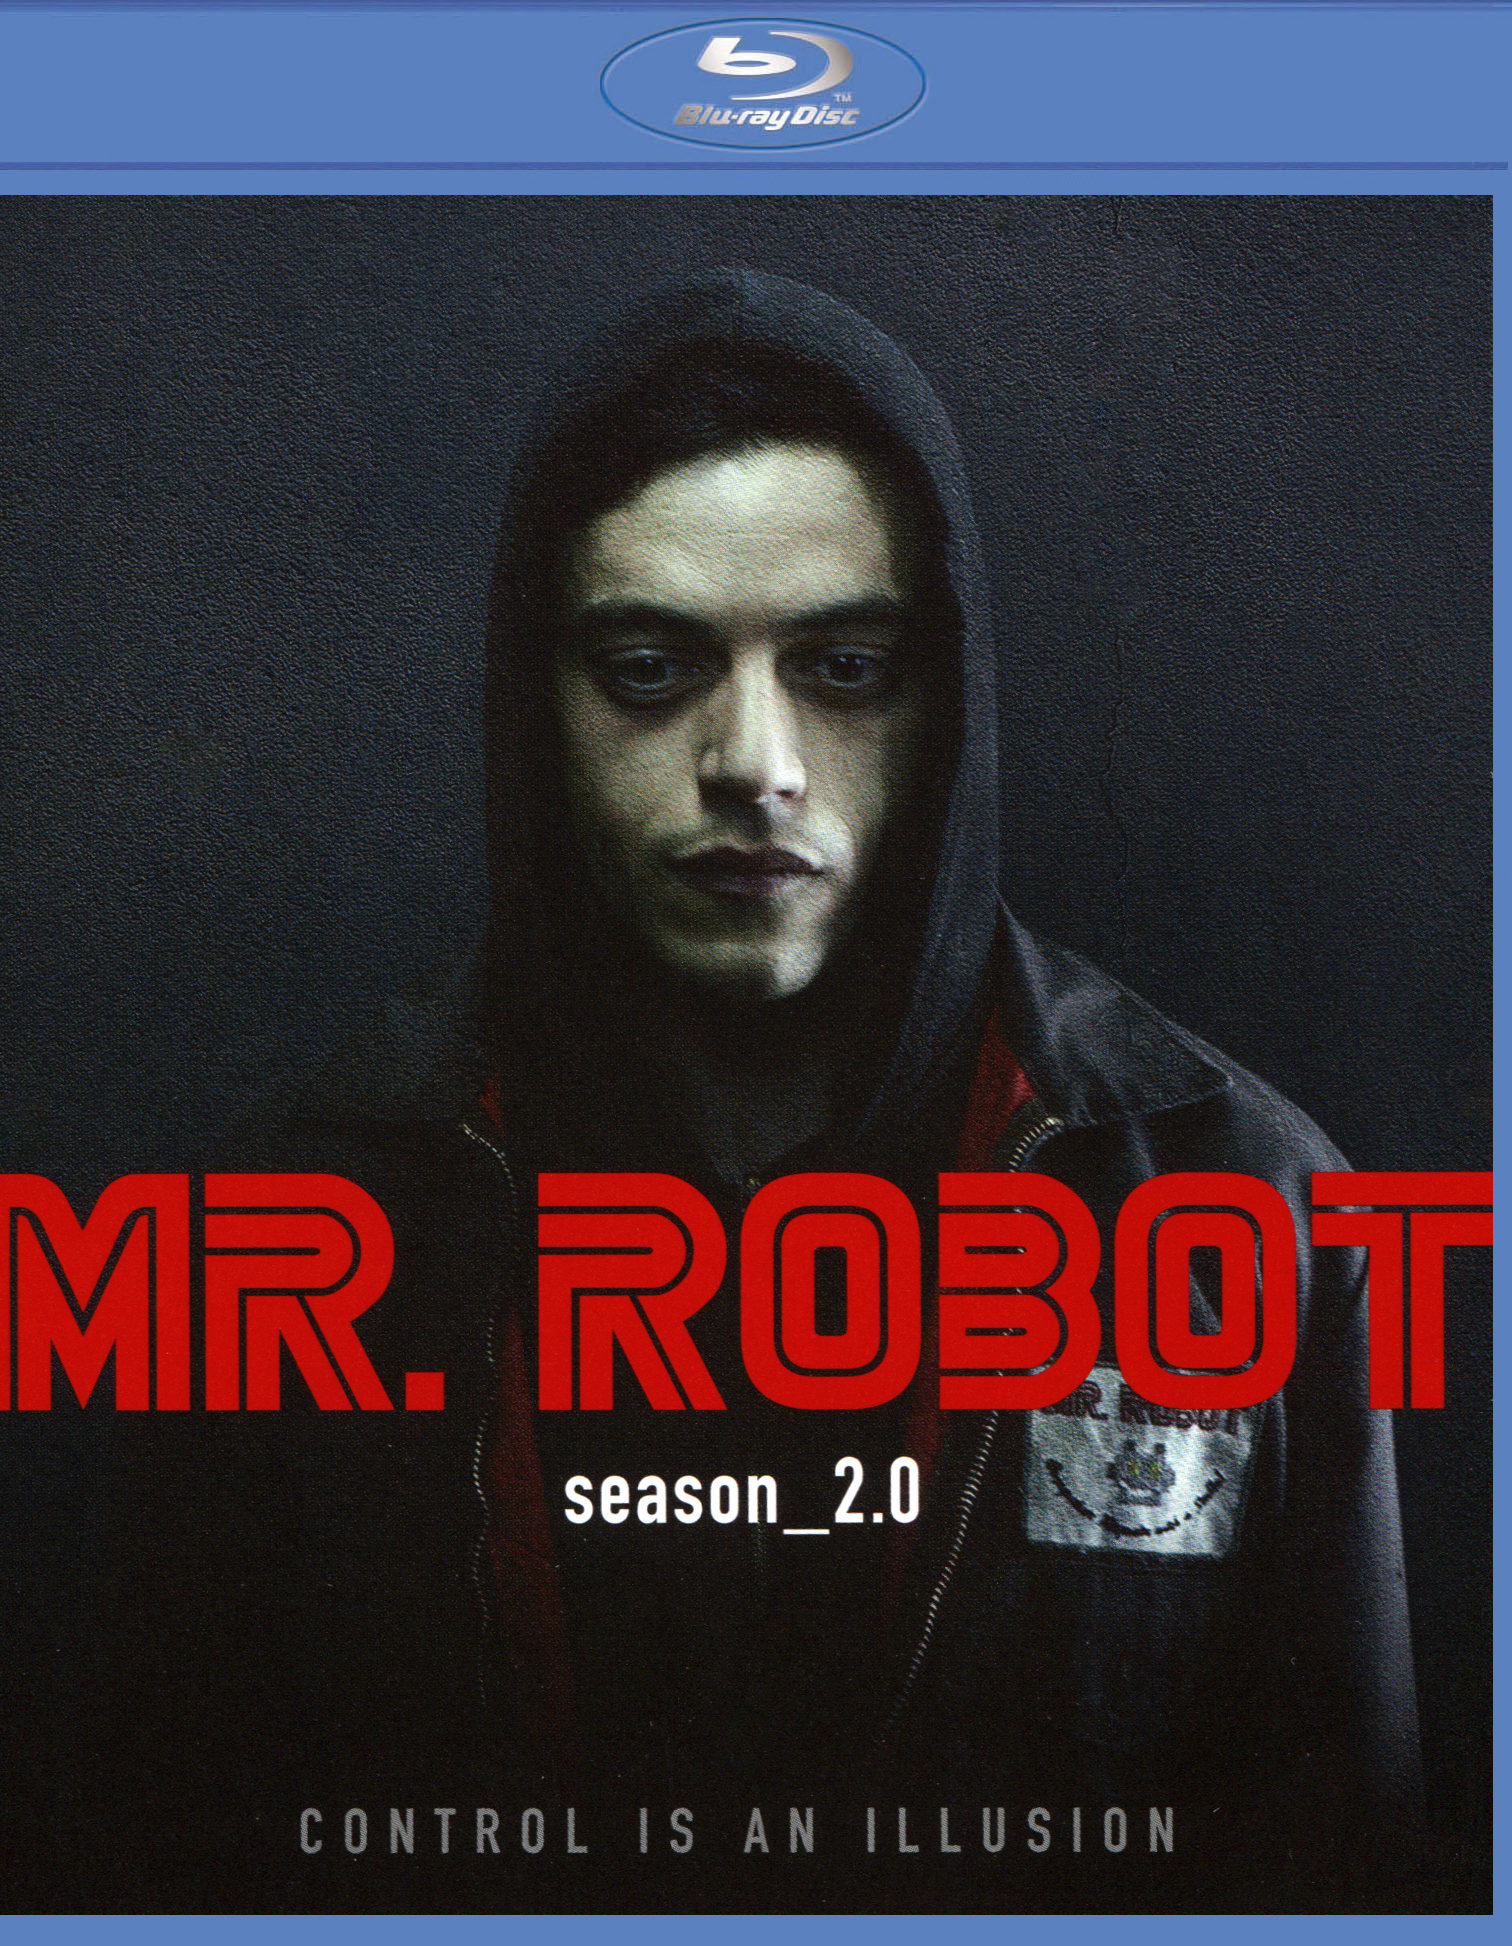 Mr. Robot: The Complete Series - Best Buy